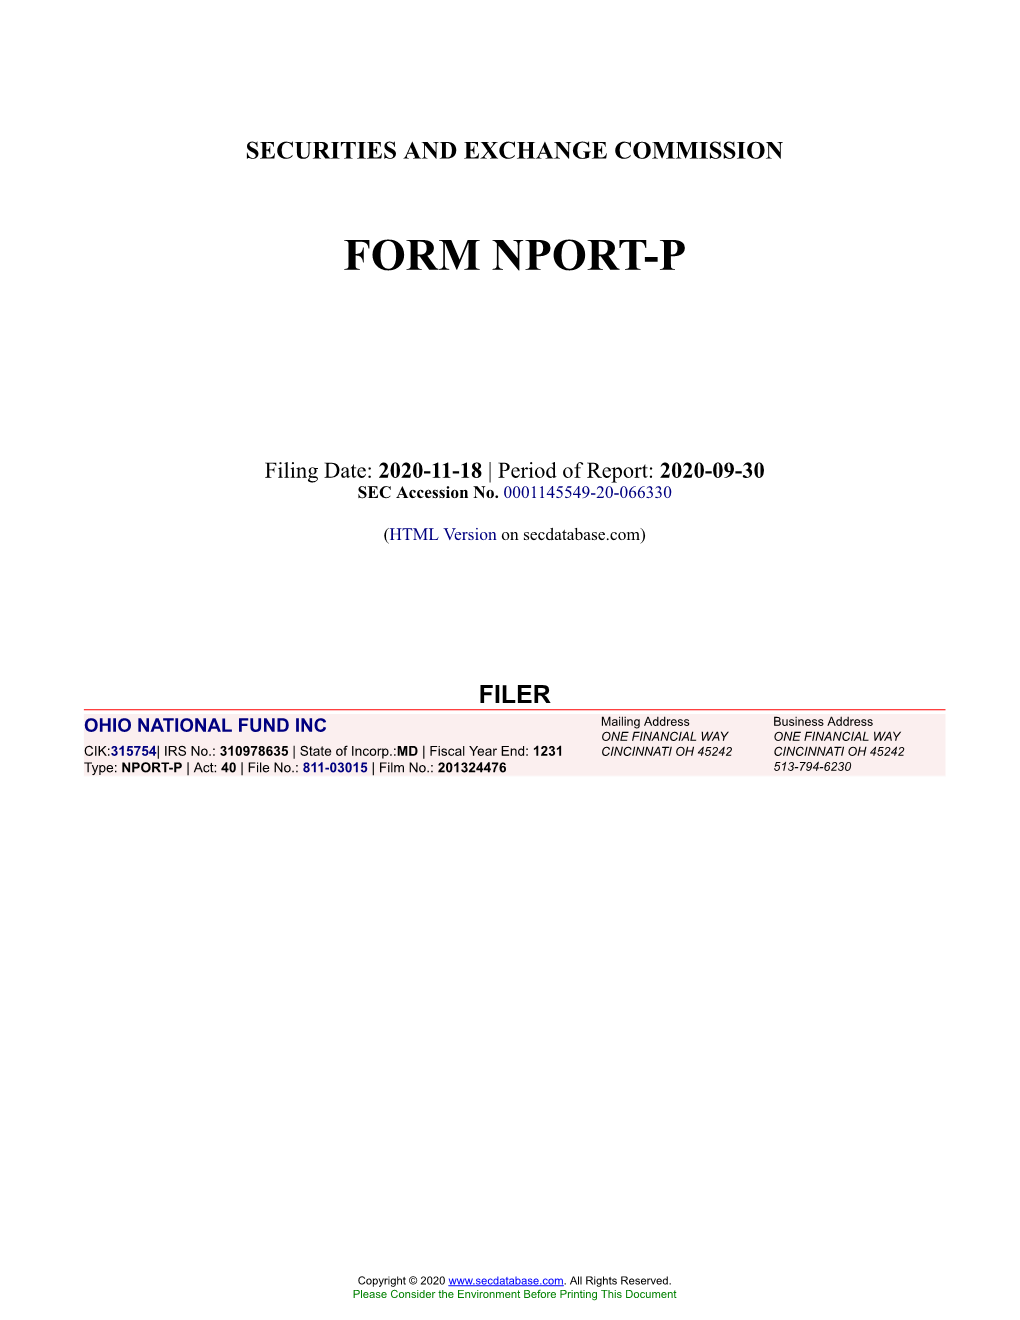 OHIO NATIONAL FUND INC Form NPORT-P Filed 2020-11-18